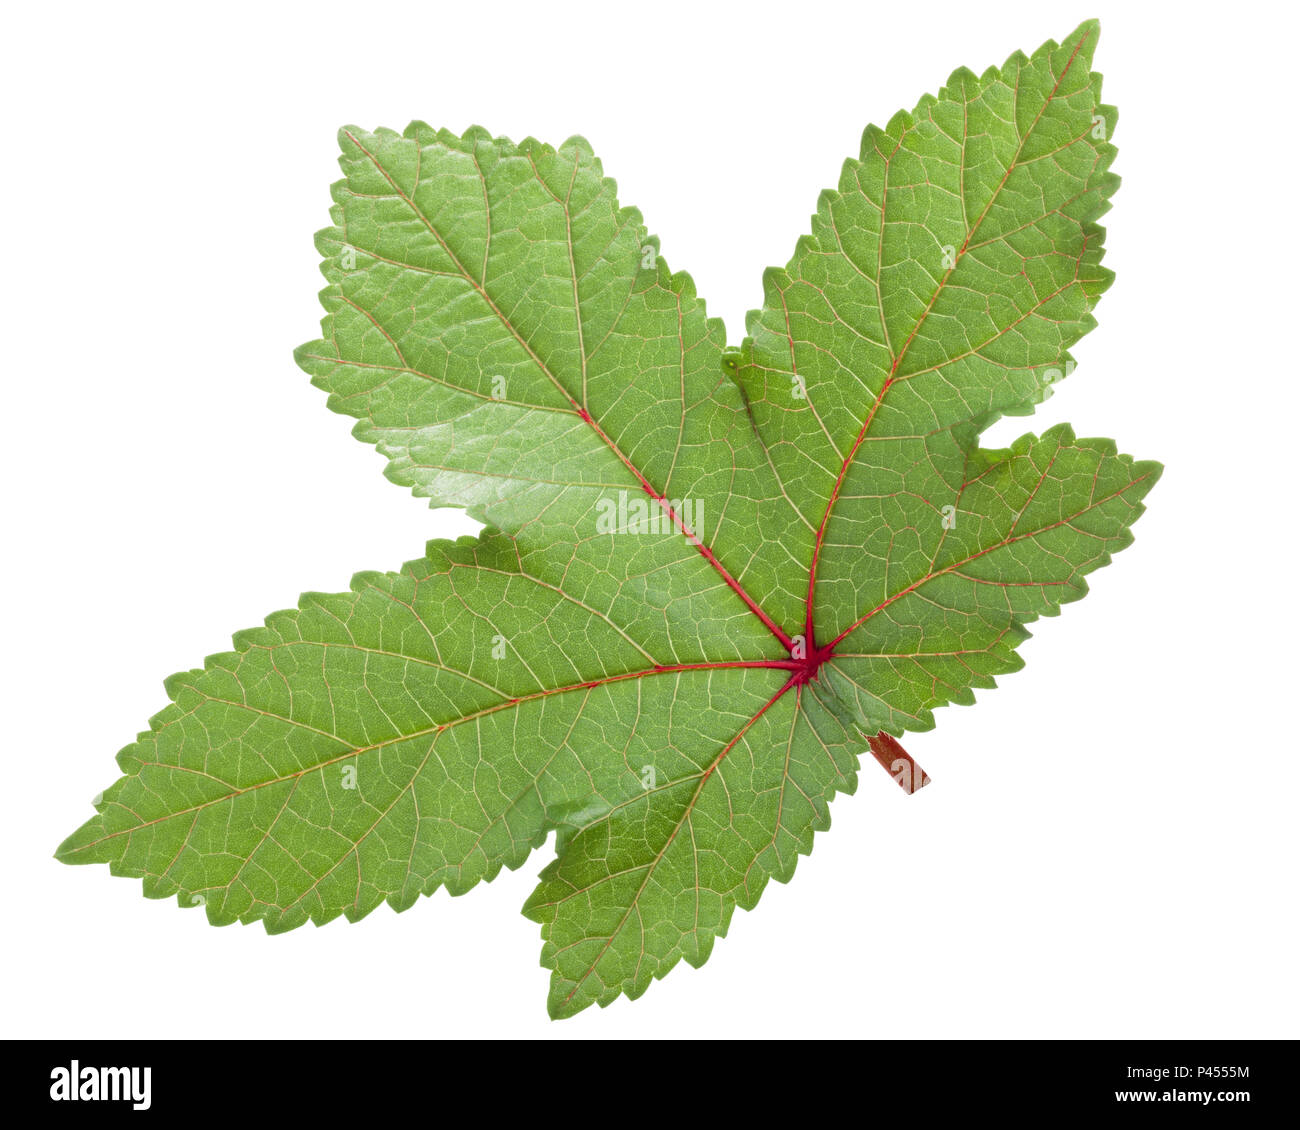 Red okra/ochro or ladies' fingers (Abelmoschus esculentus) leaf Stock Photo